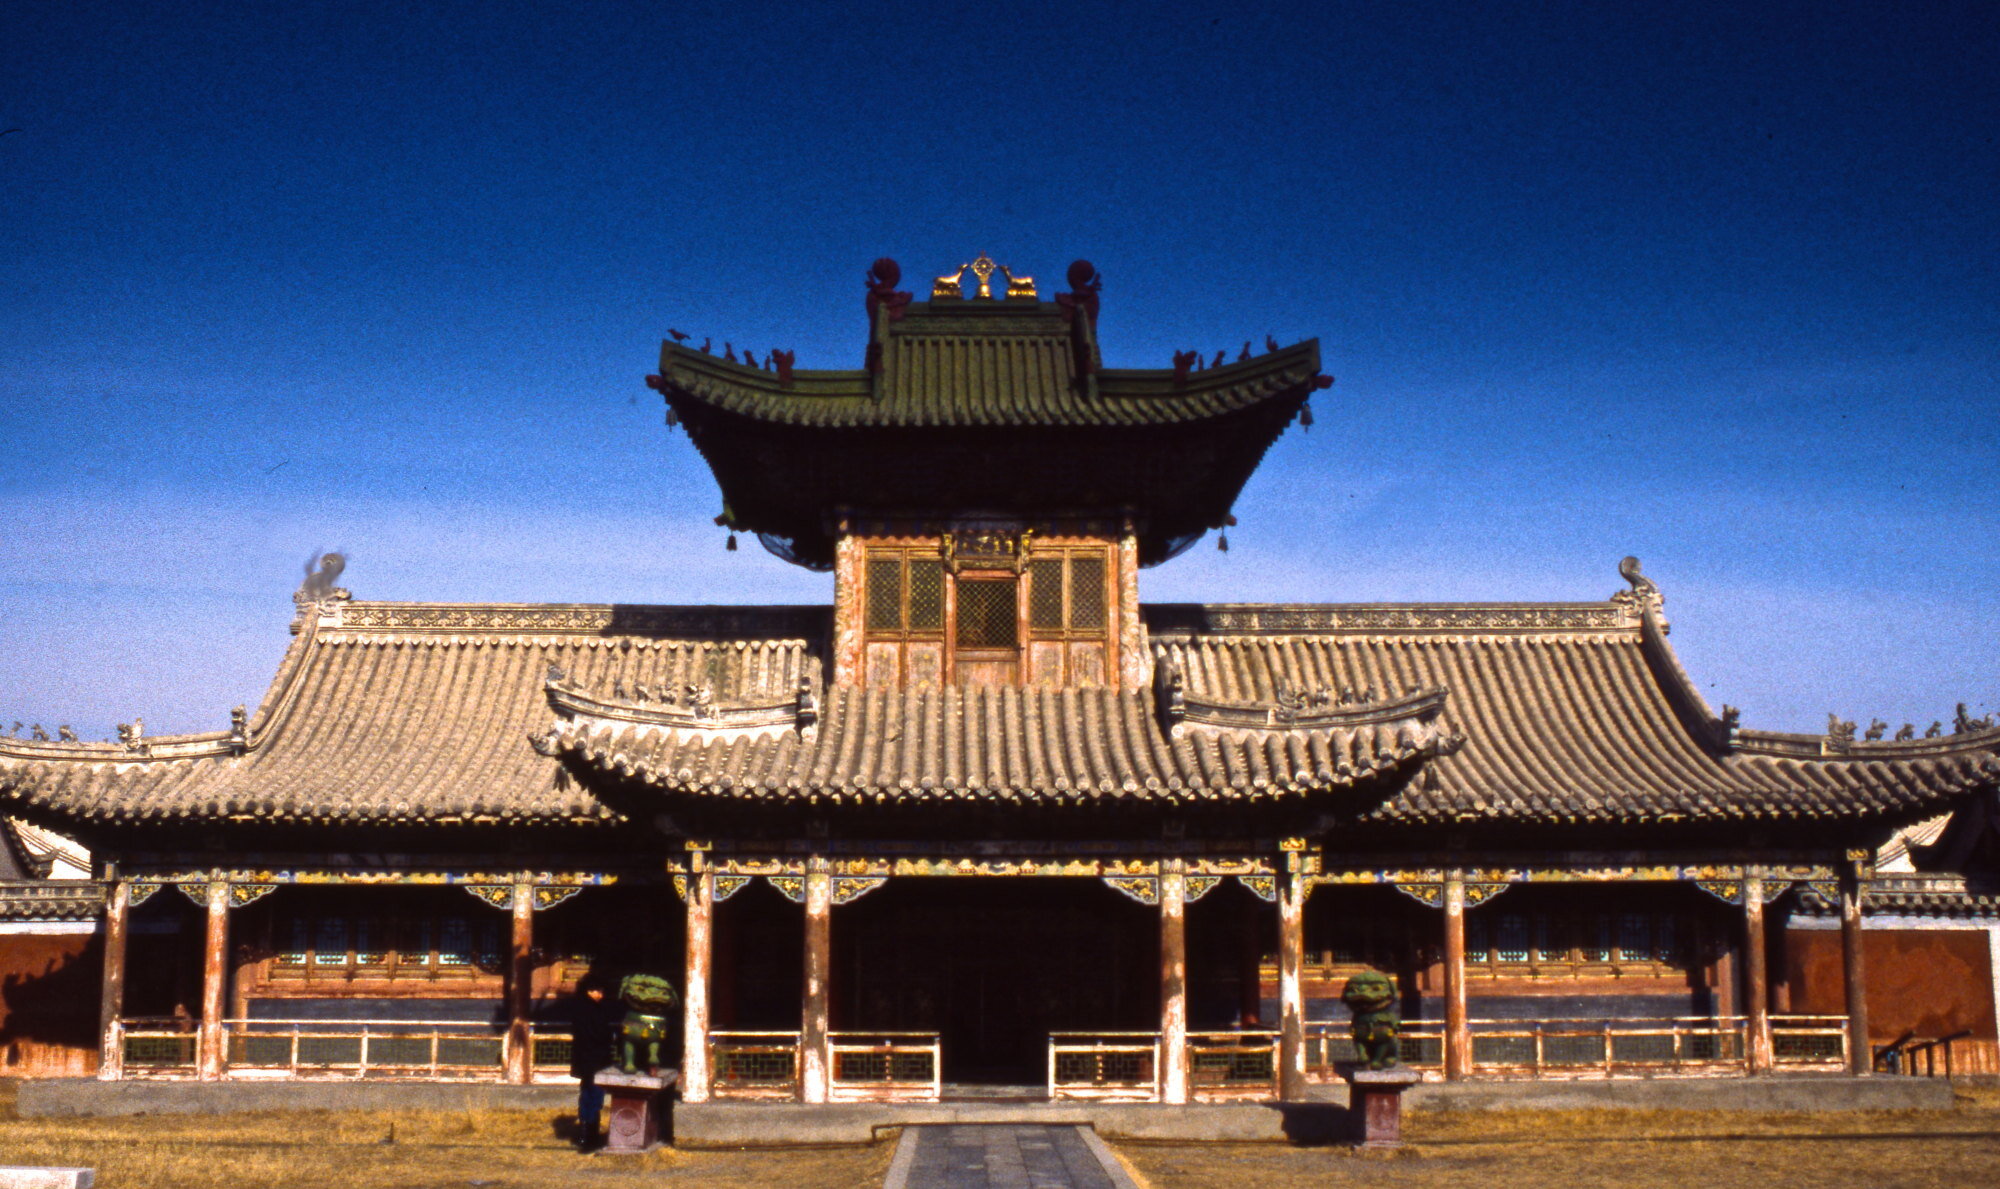 Bogd Khan's summer palace. Ulaan Baatar, Mongolia.